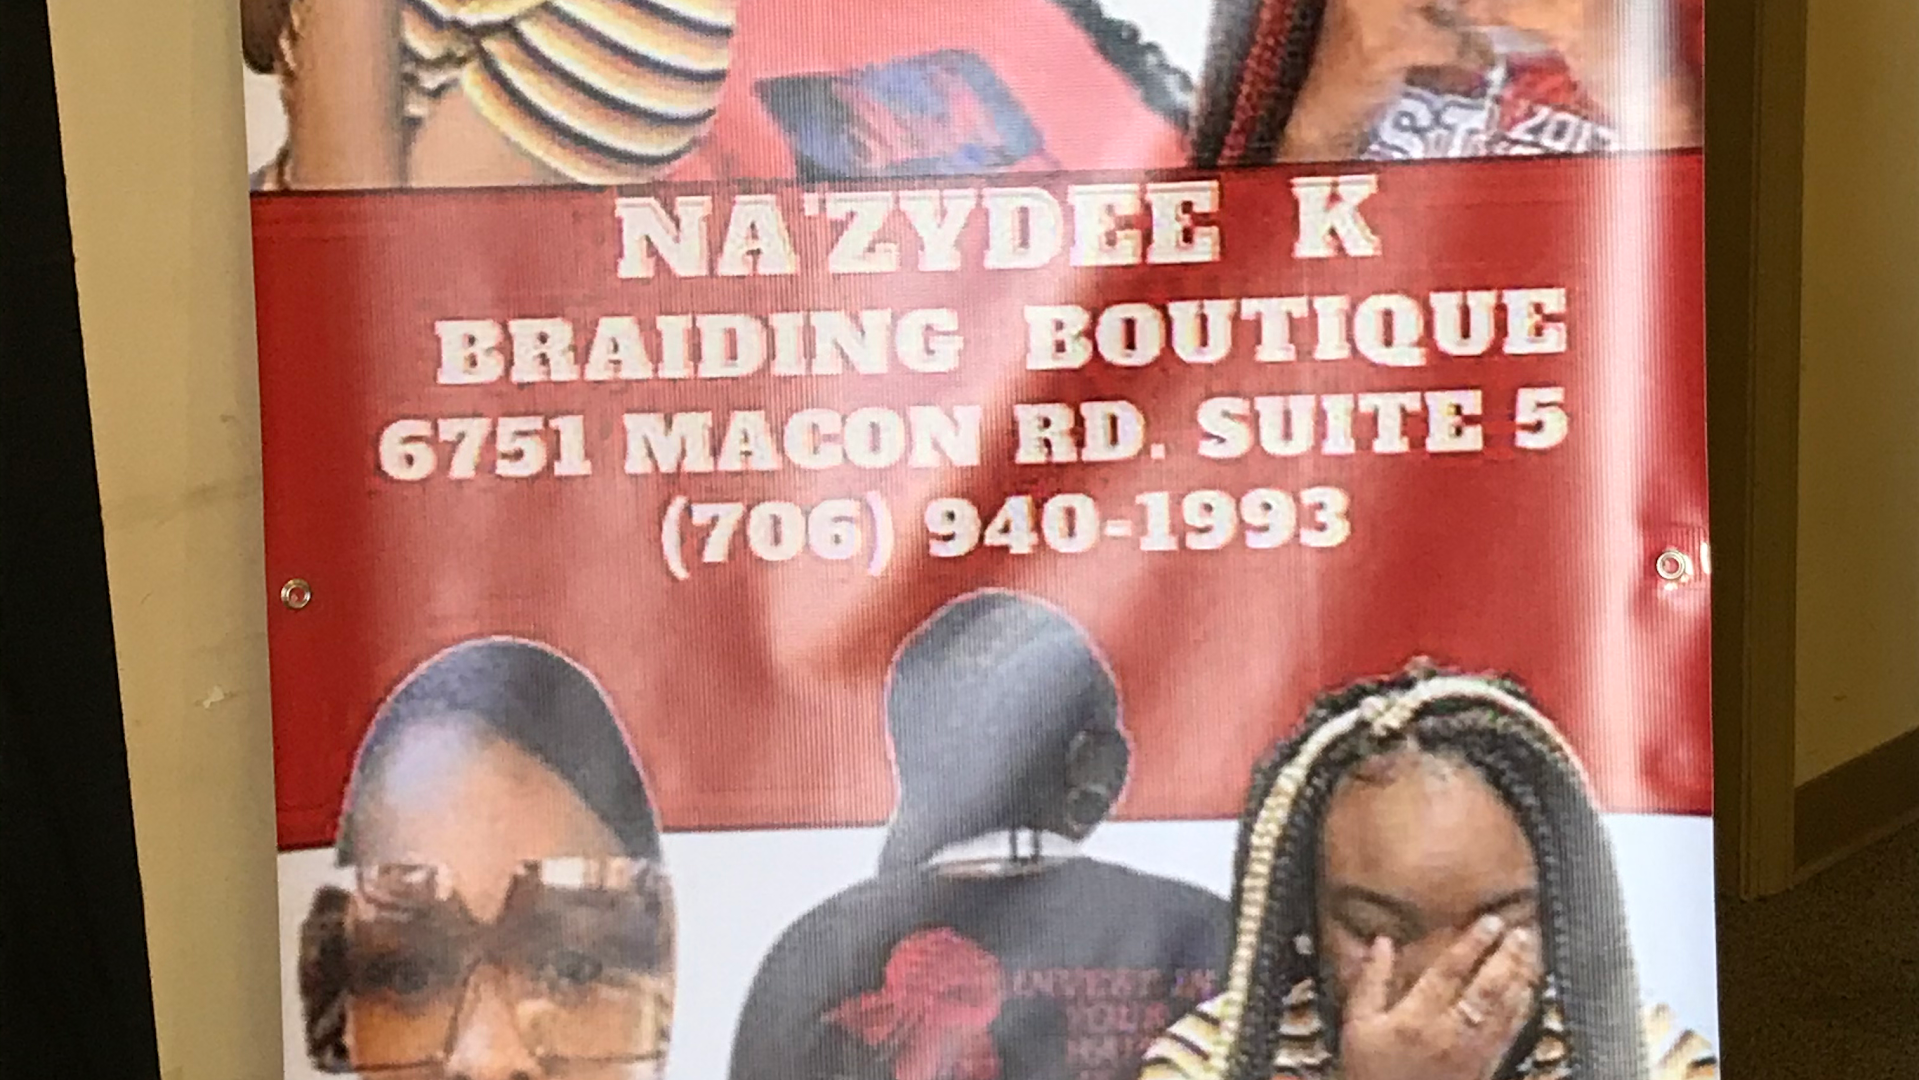 Na'zydee K Braiding Boutique